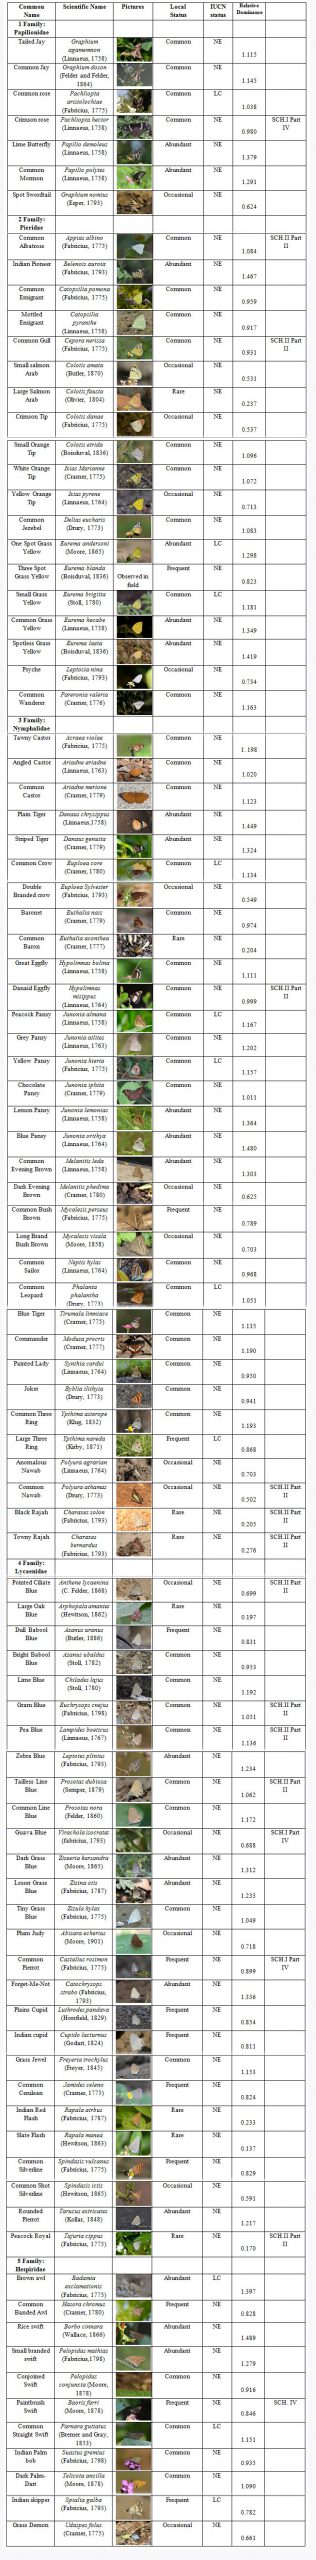 Table 1. Butterfly diversity in the Tipeshwar Wildlife Sanctuary, Maharashtra, India during 1 Dec. 2017 to 30 Nov. 2018